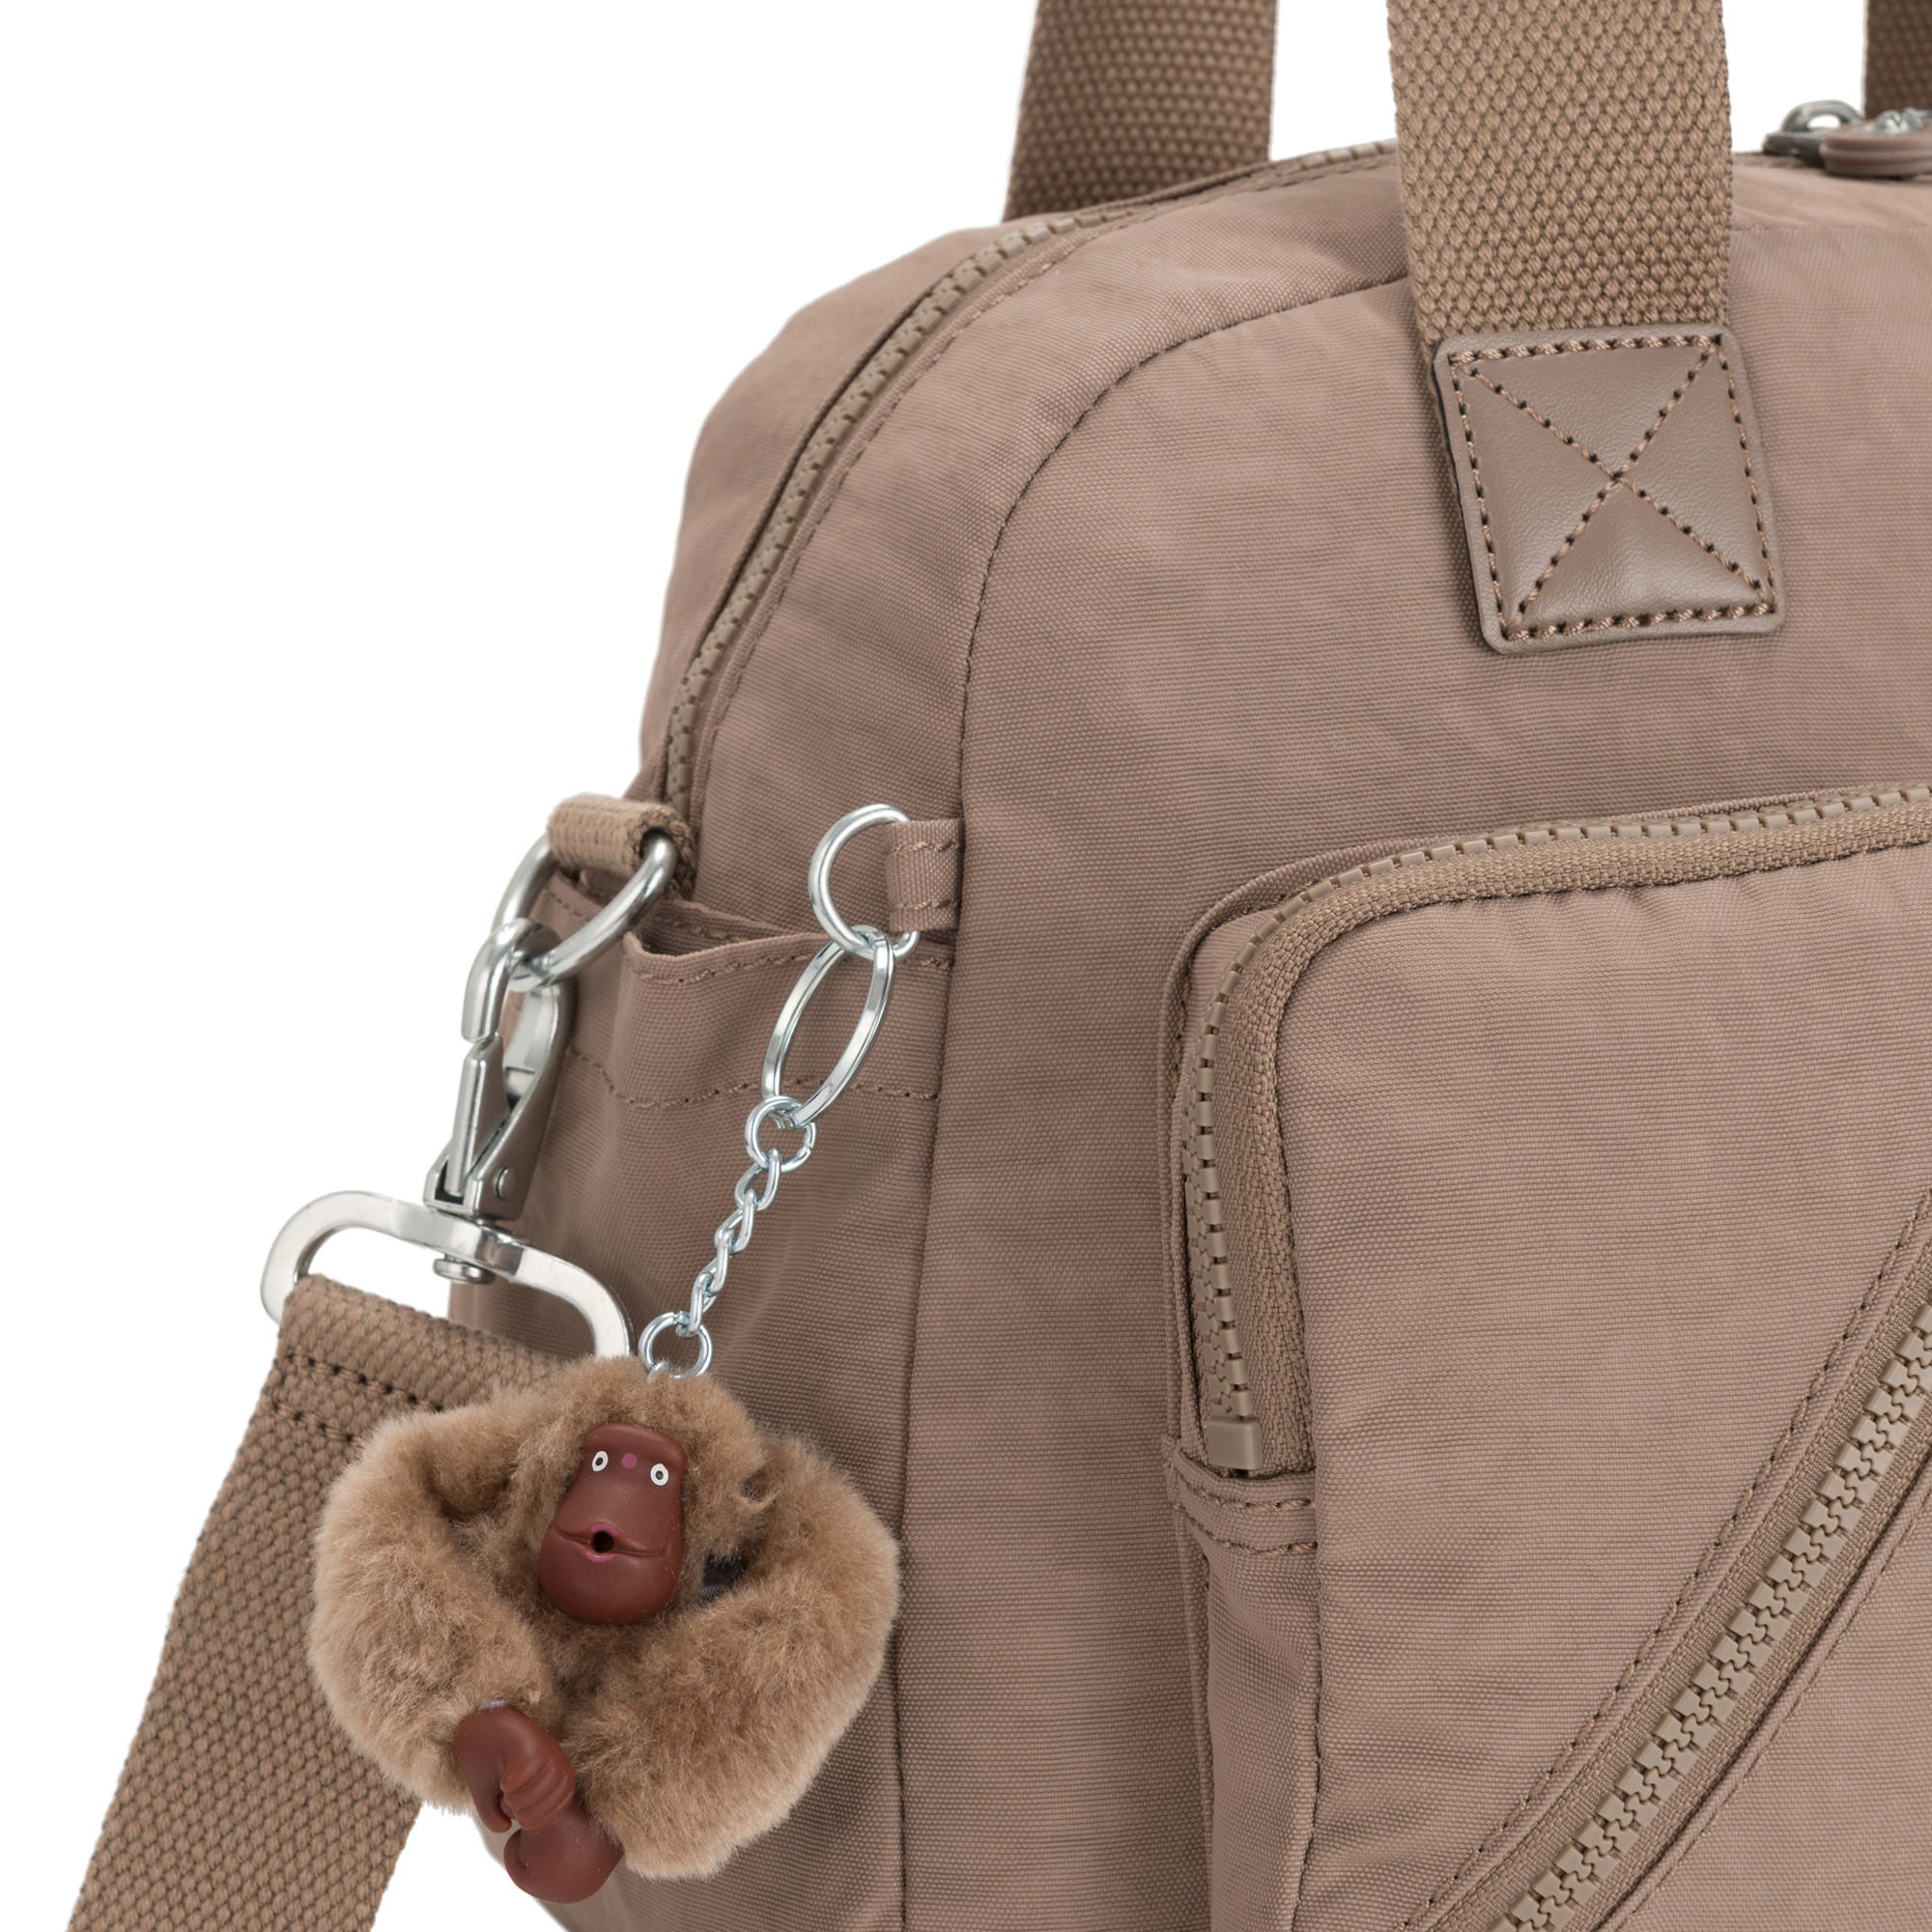 Kipling Defea Handbag | eBay